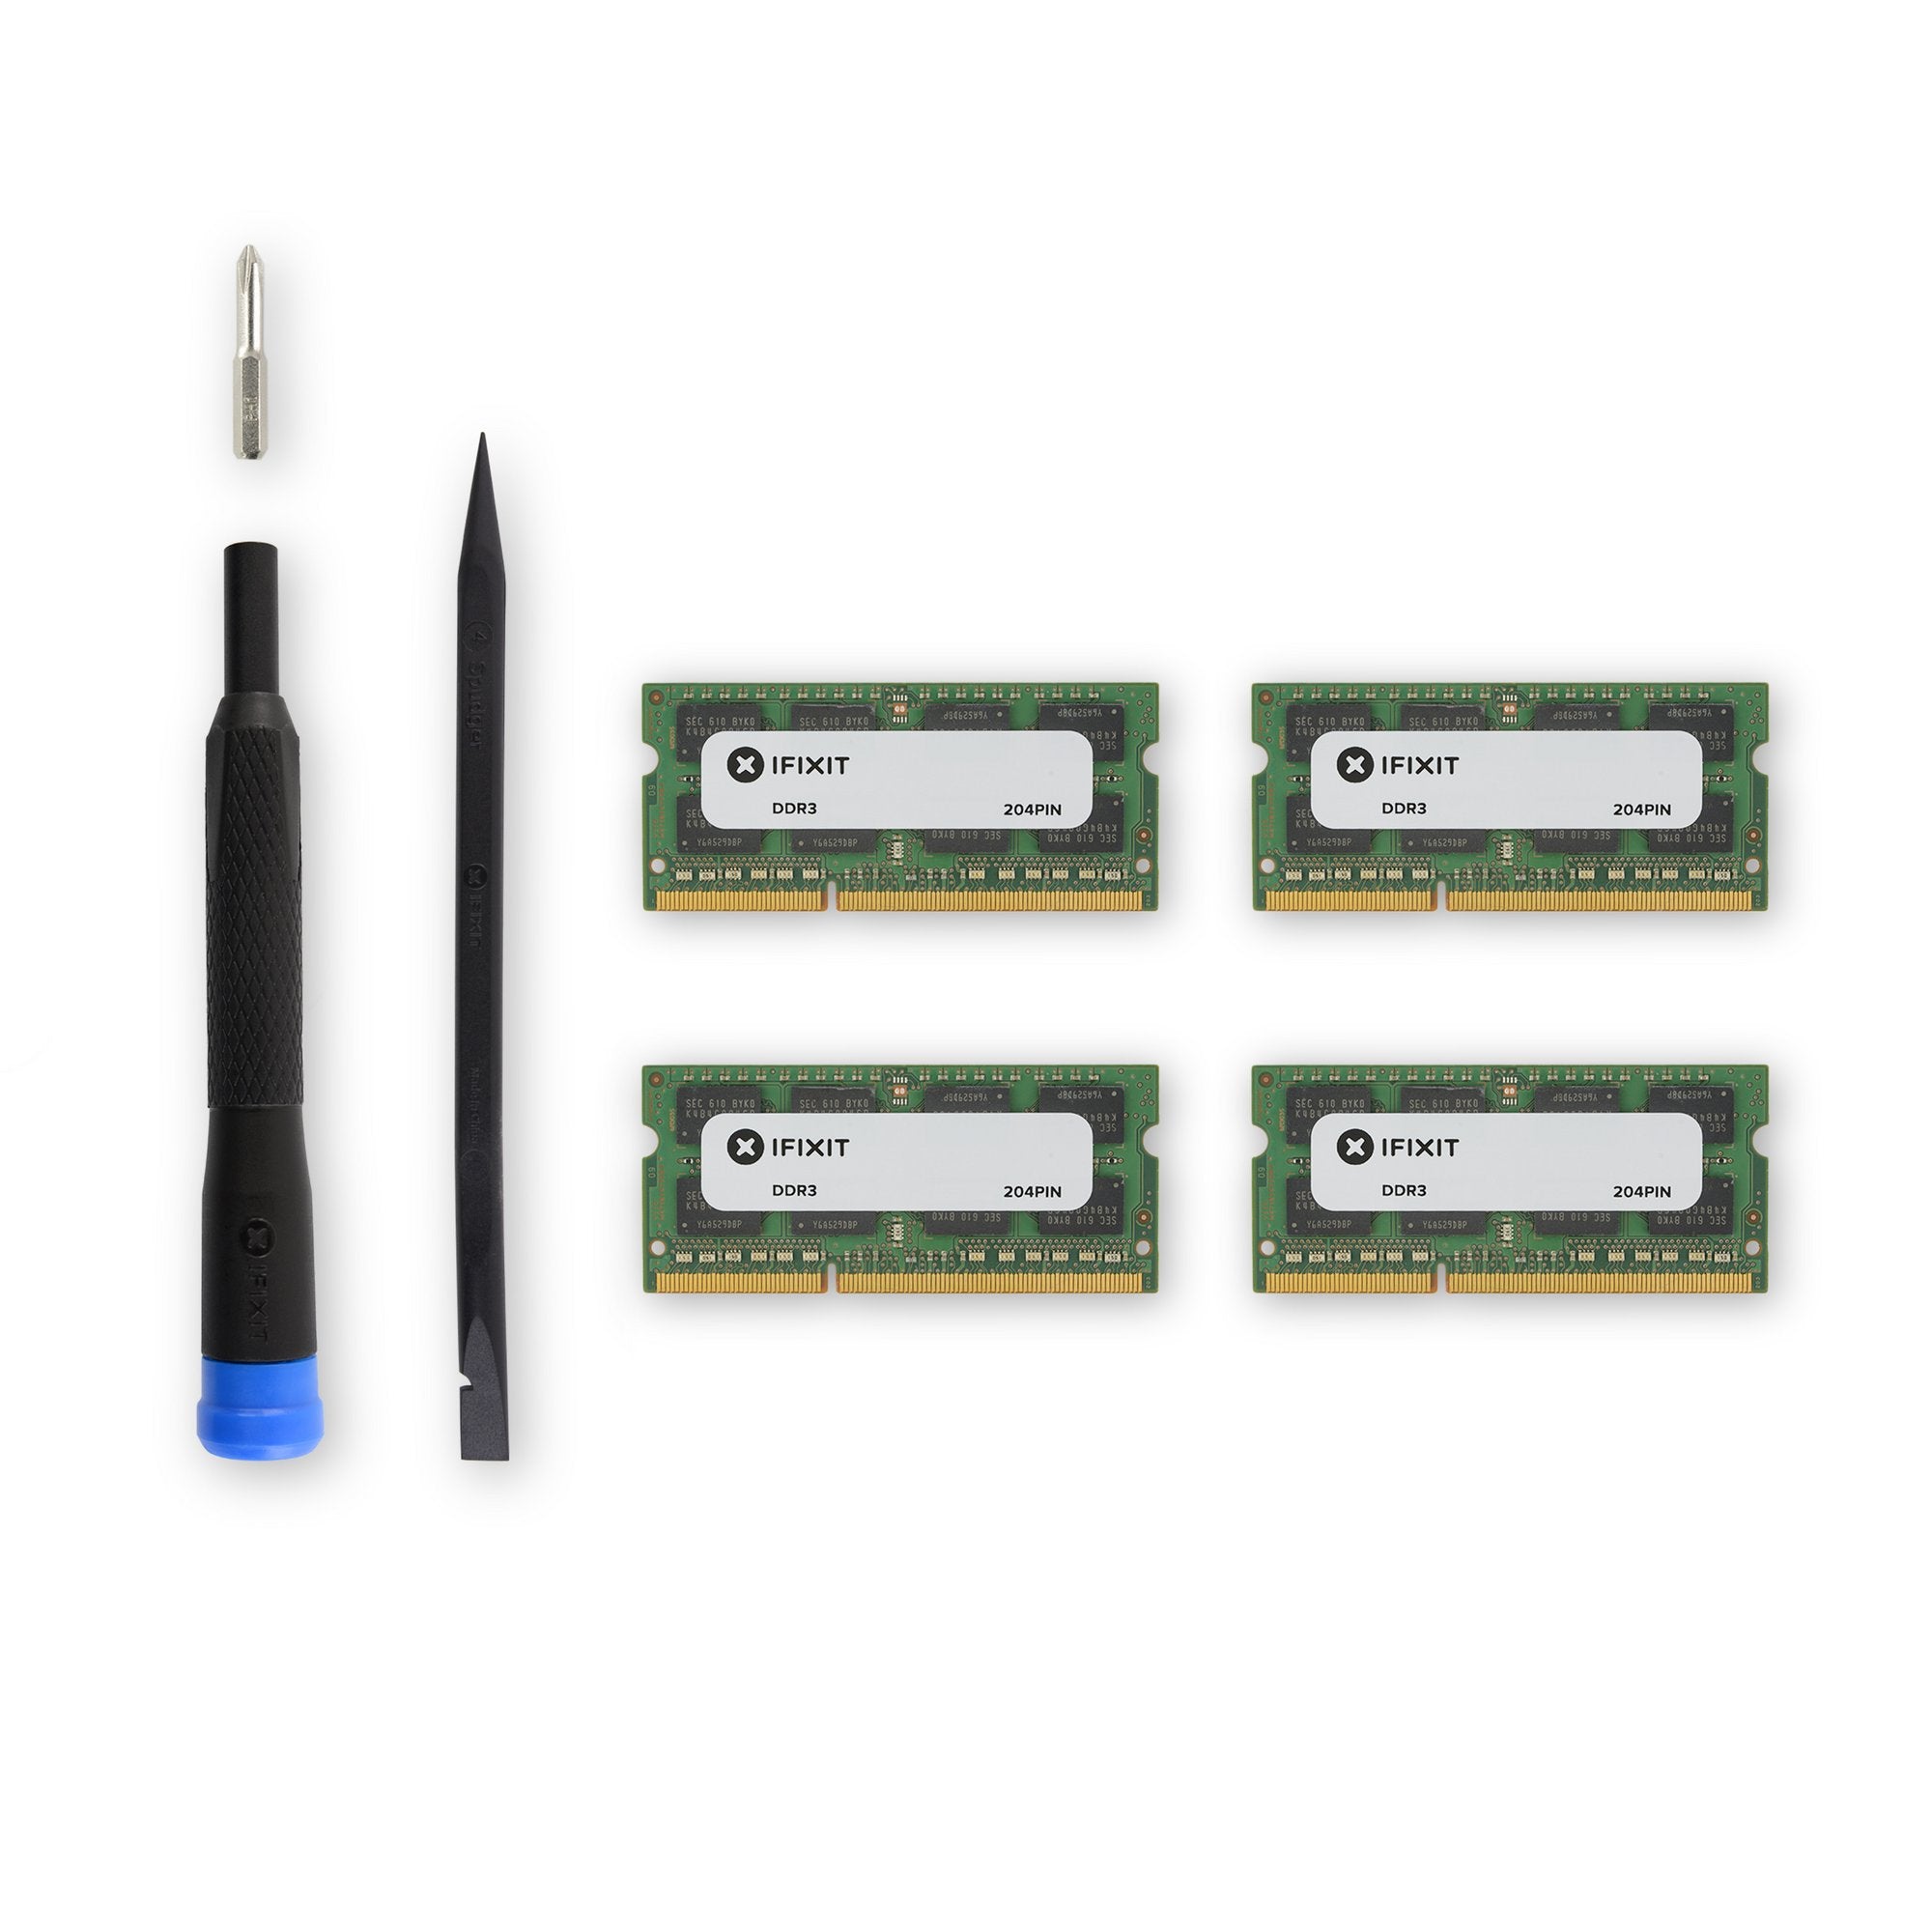 Intel 27" (Core i3) EMC 2390 2010) Memory Maxxer RAM Upgrade Kit